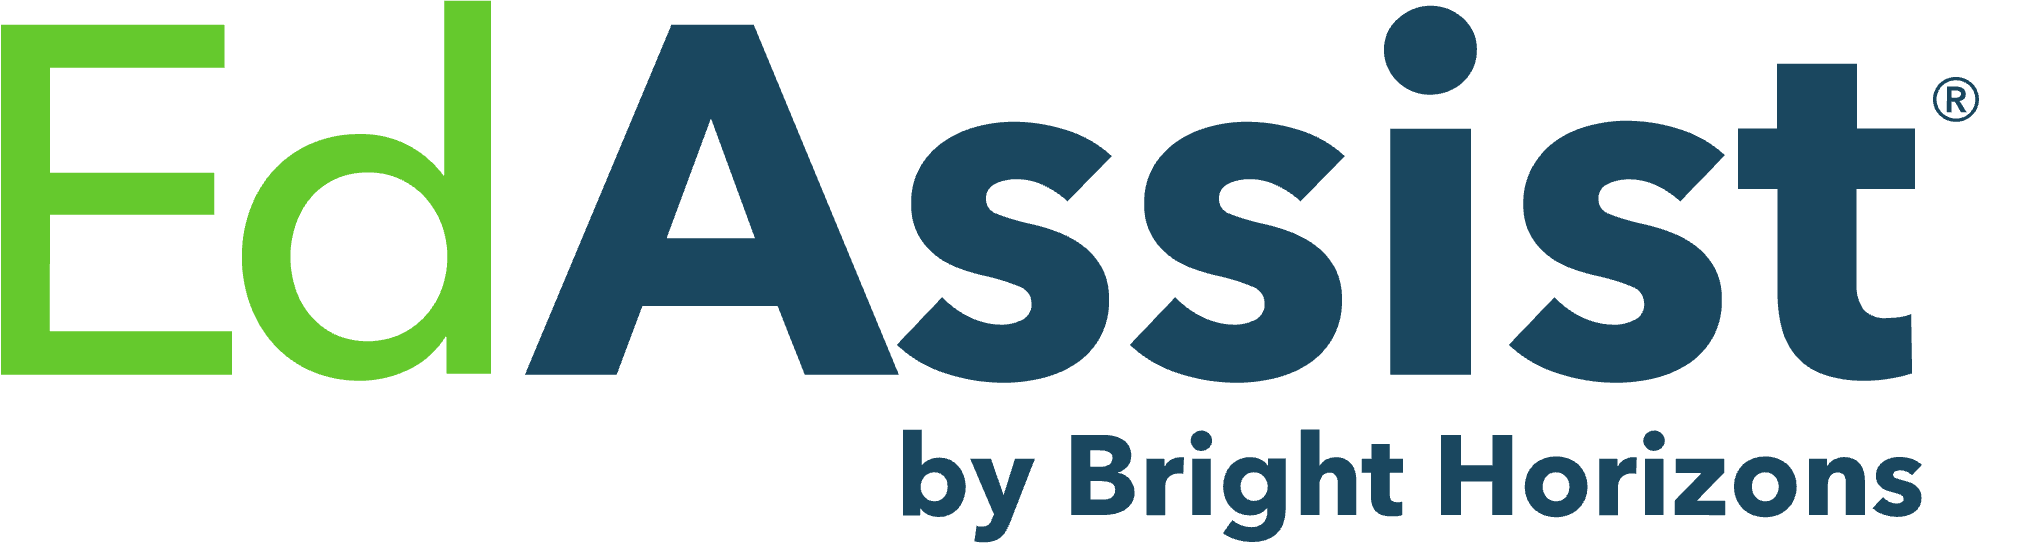 edassist-solutions-logo.png